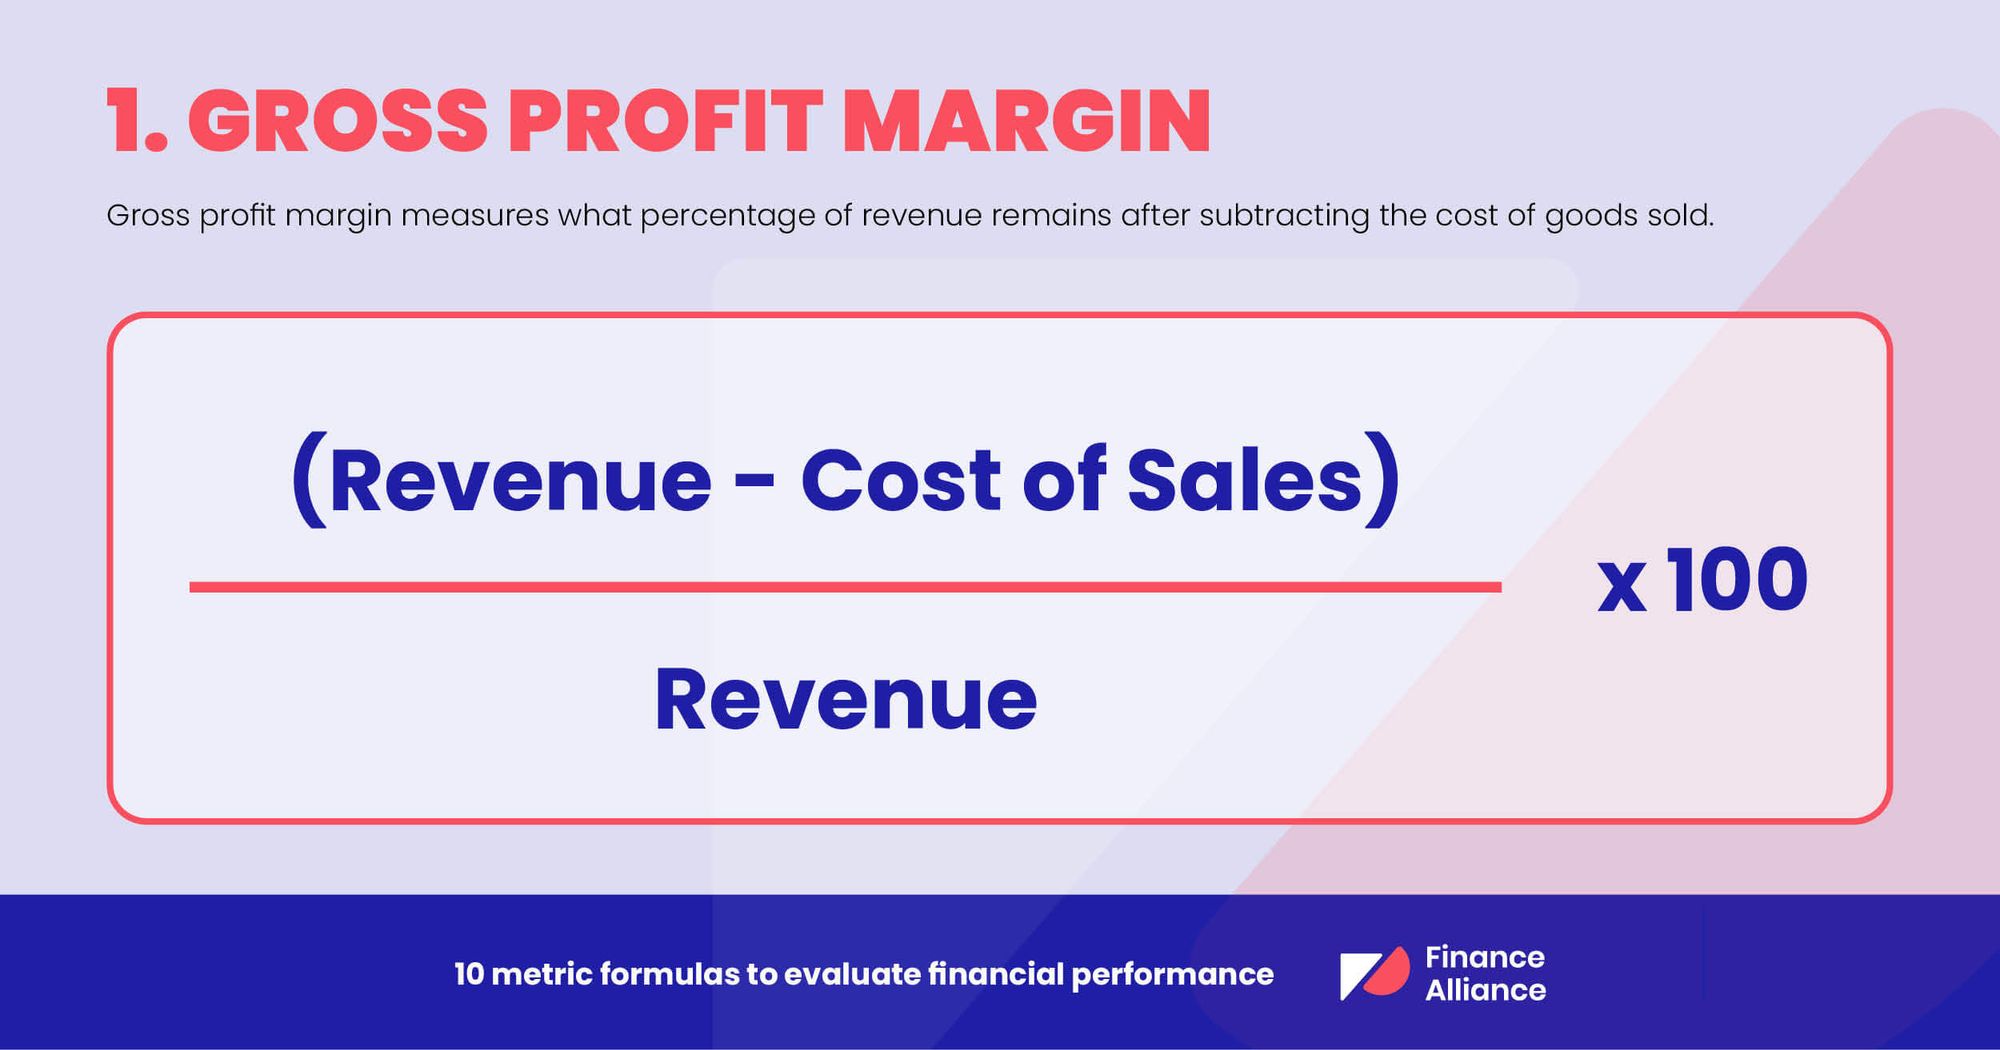 Financial performance analysis metric 1 - Gross profit margin